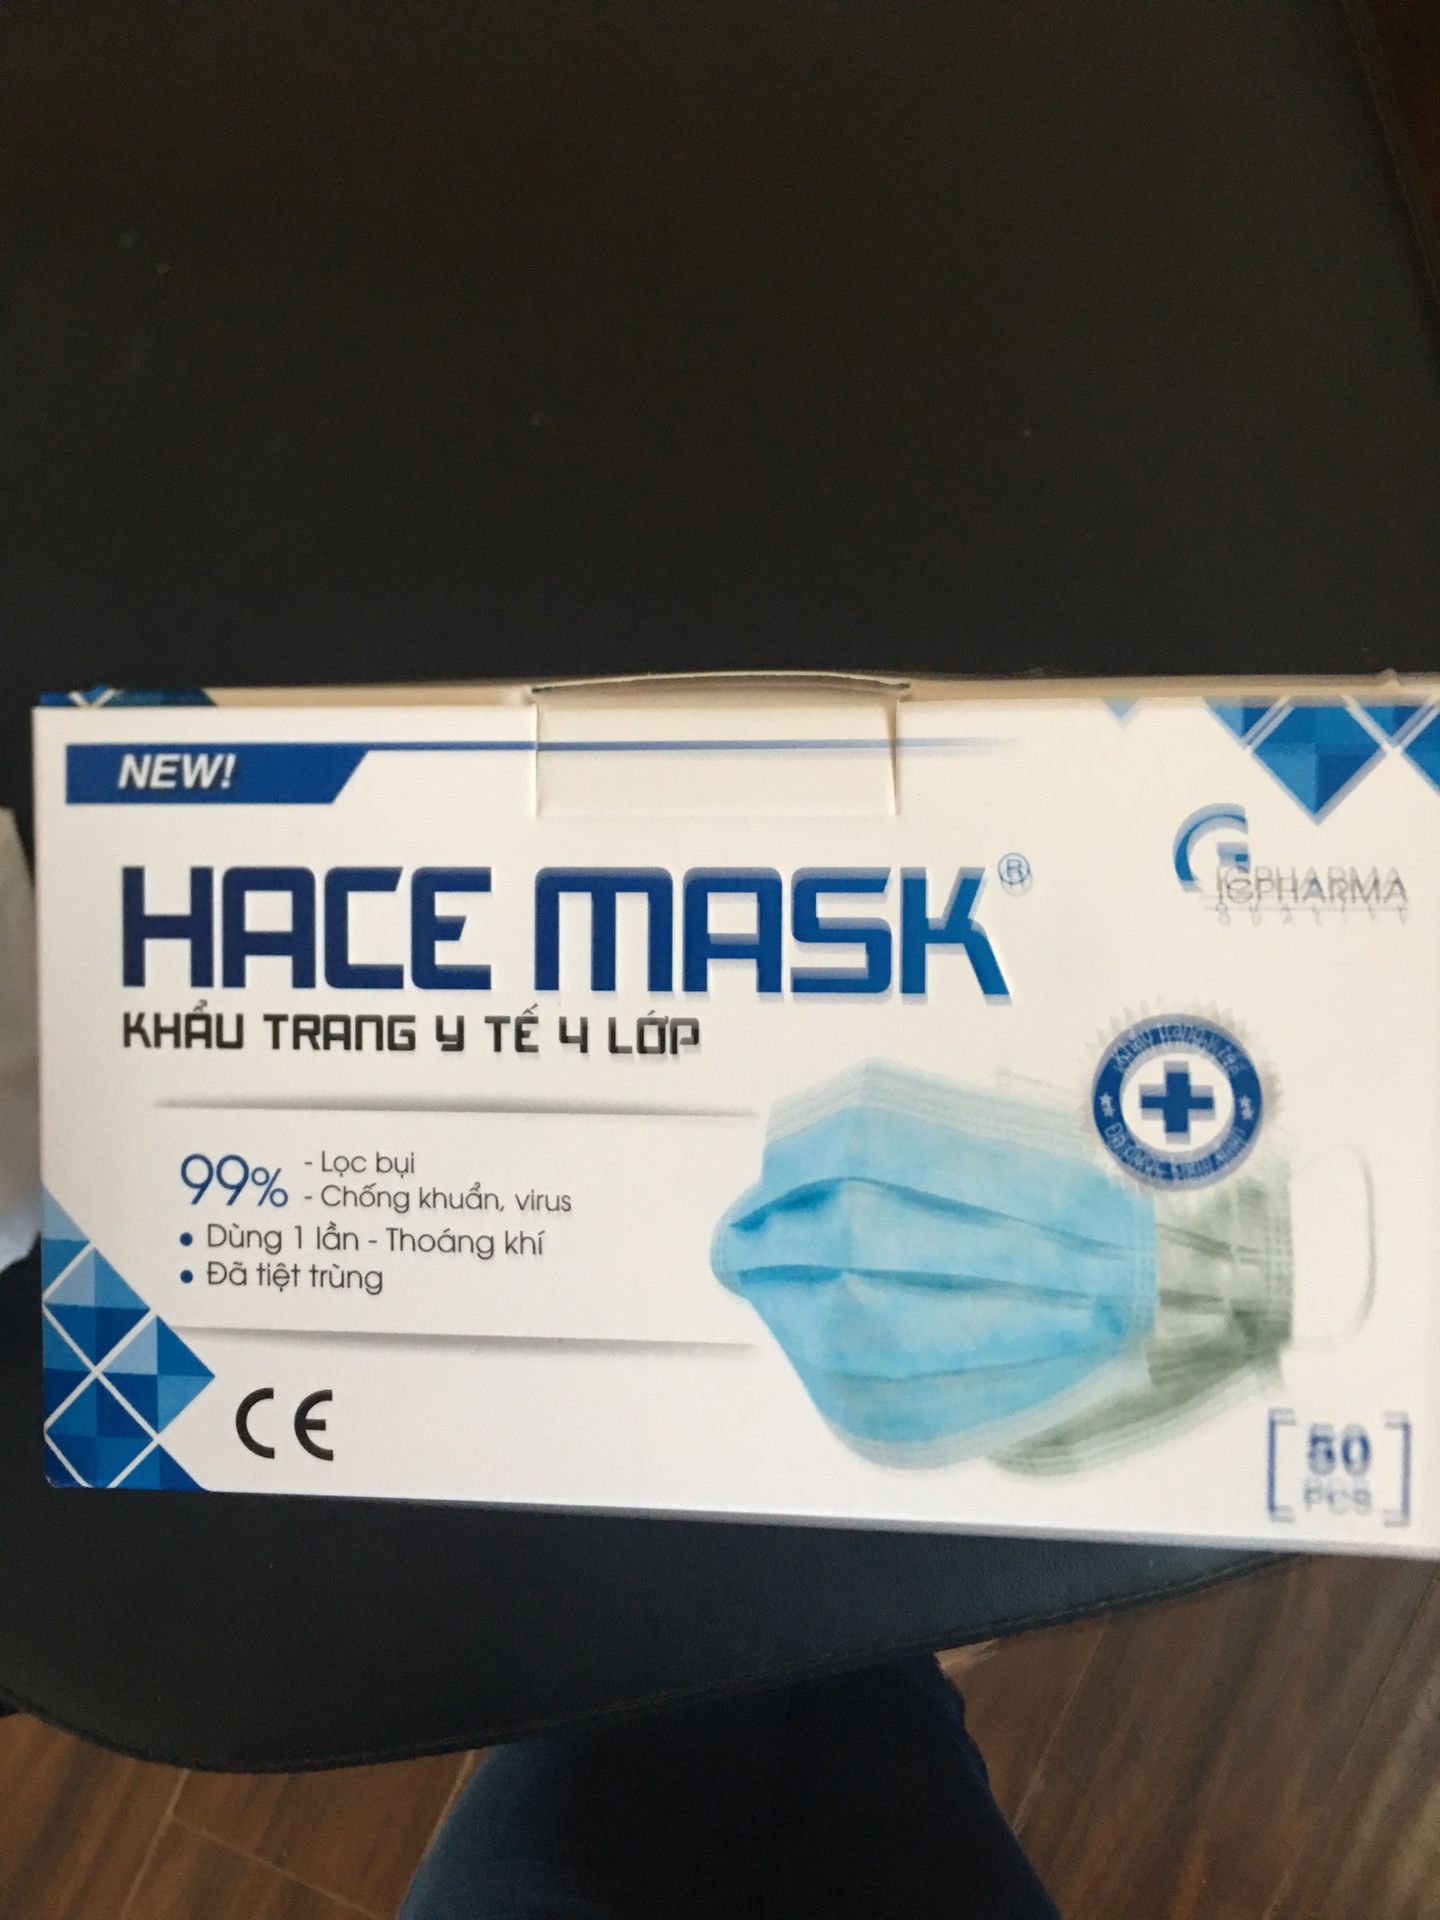 Hace mask